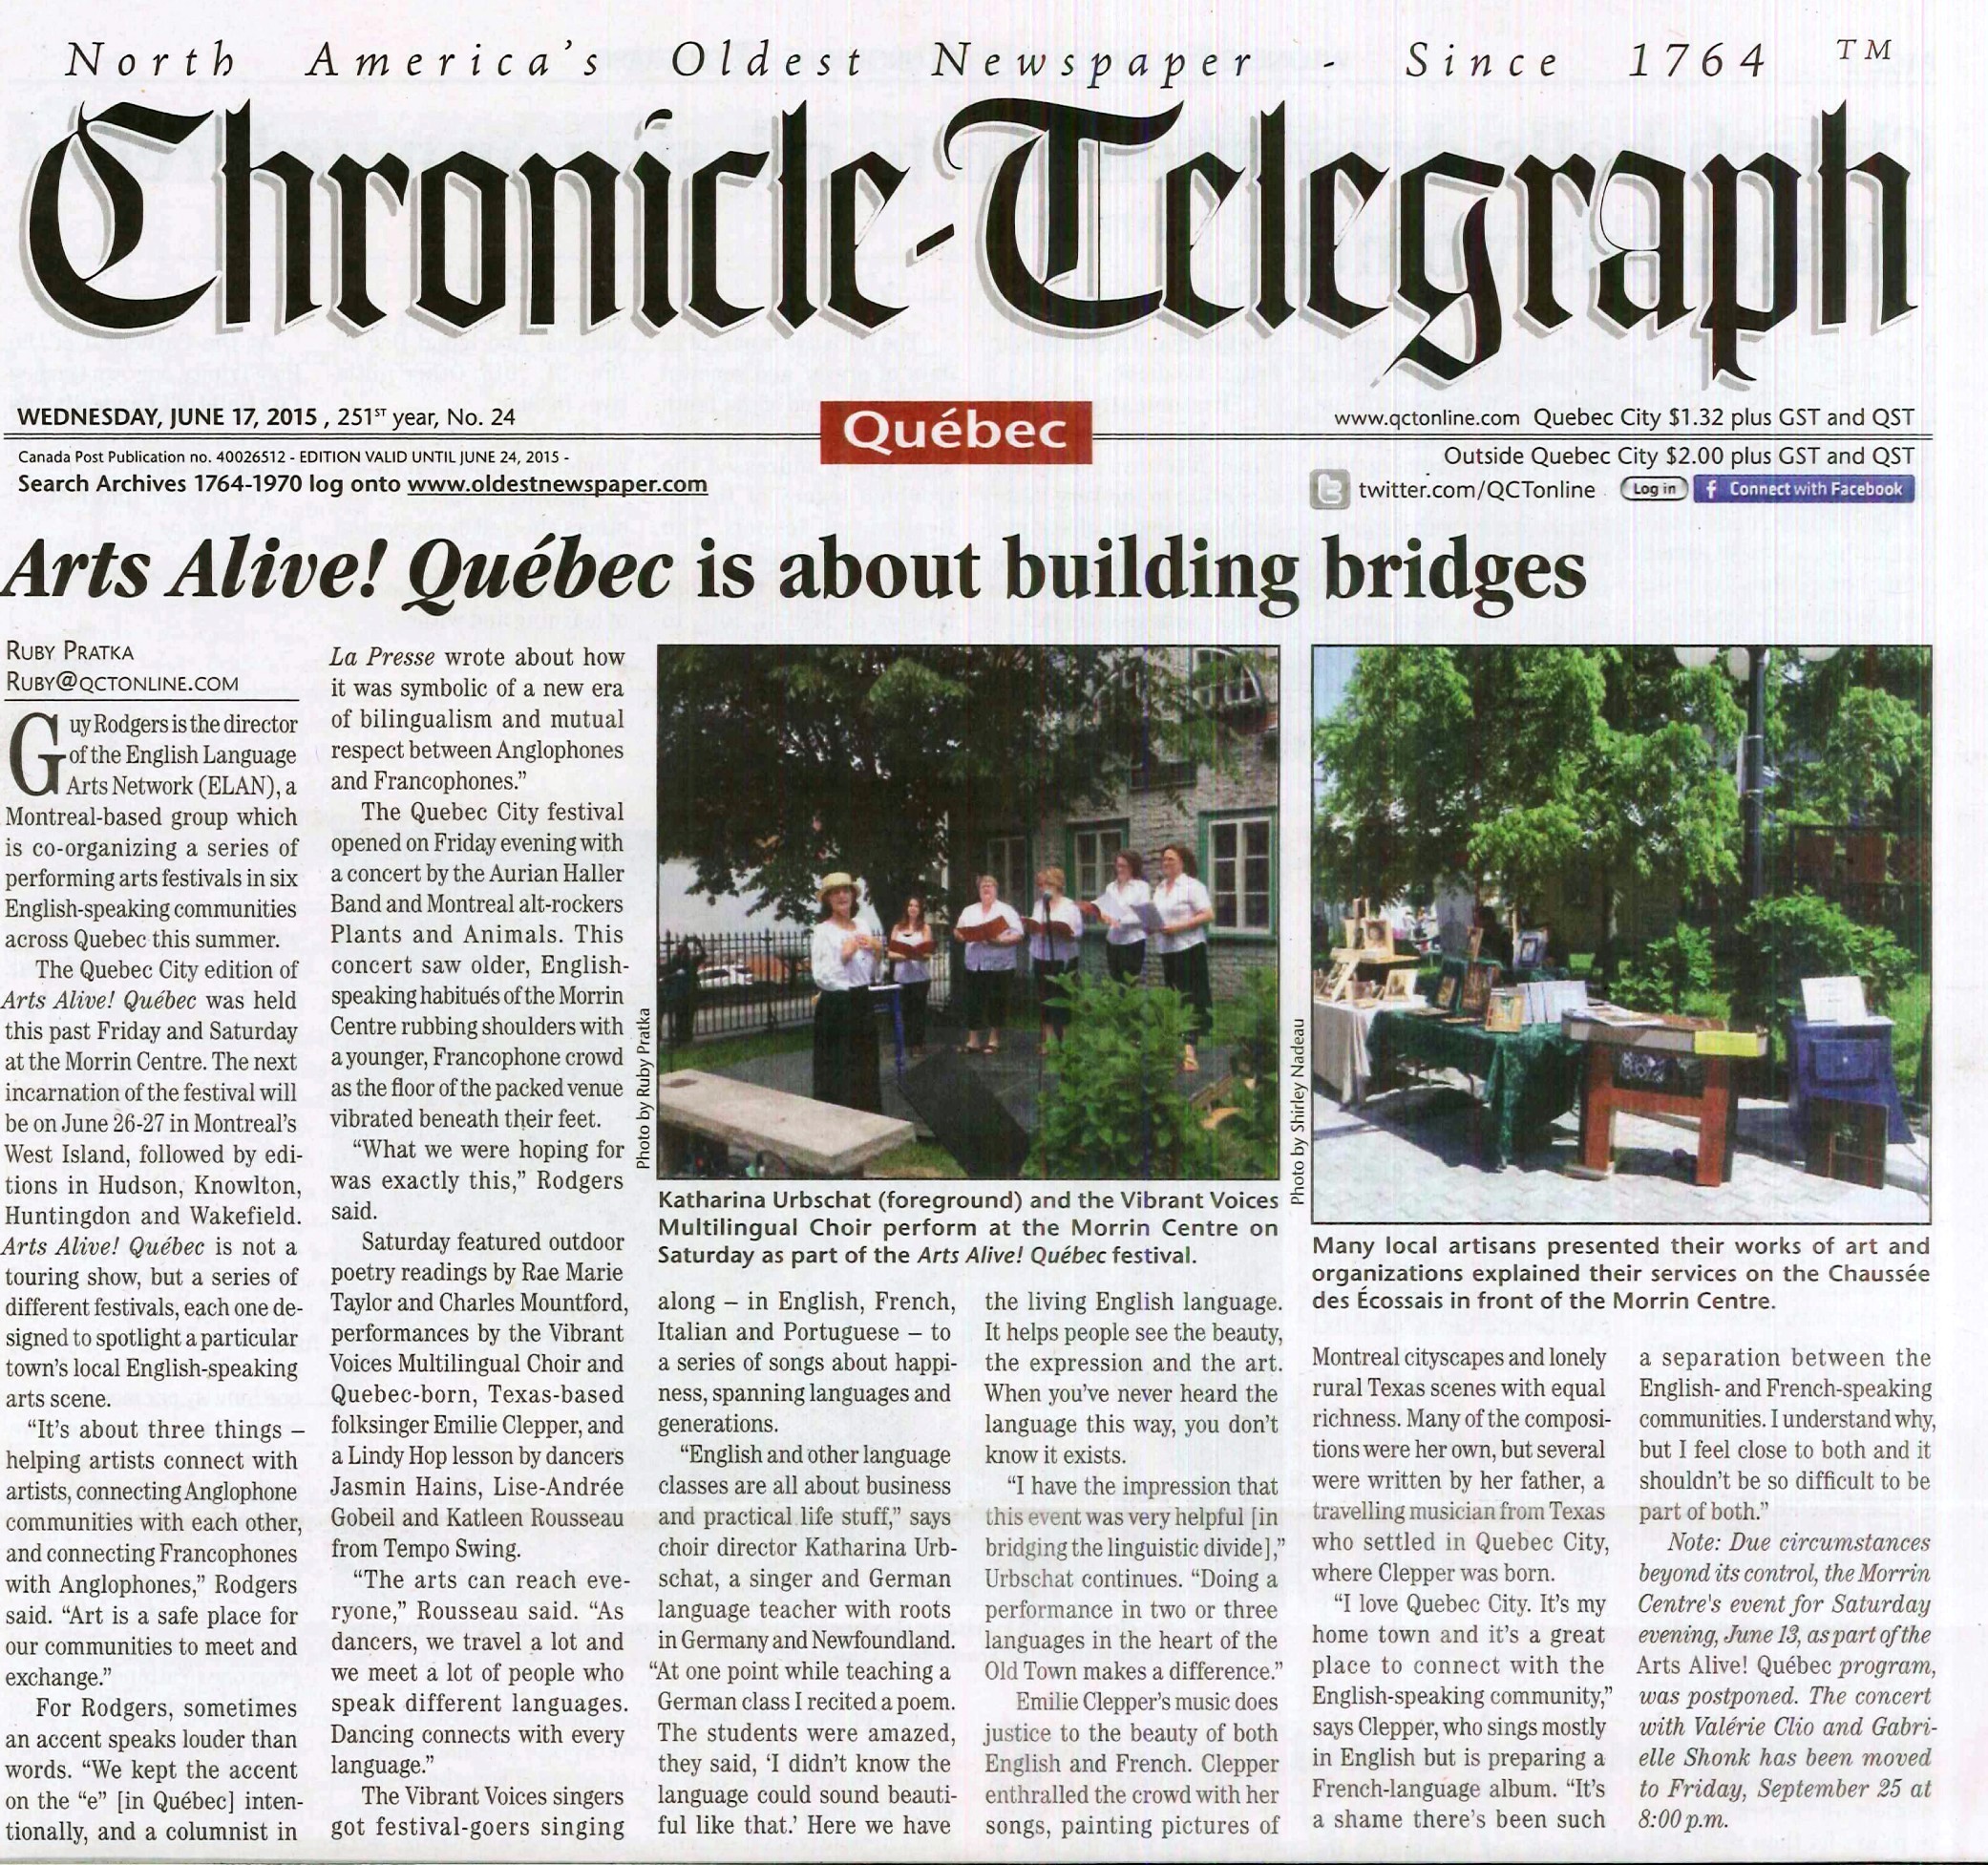 Articles on Arts Alive! QuÃ©bec - Building Bridges (Chronicle-Telegraph,  2015) - ELAN